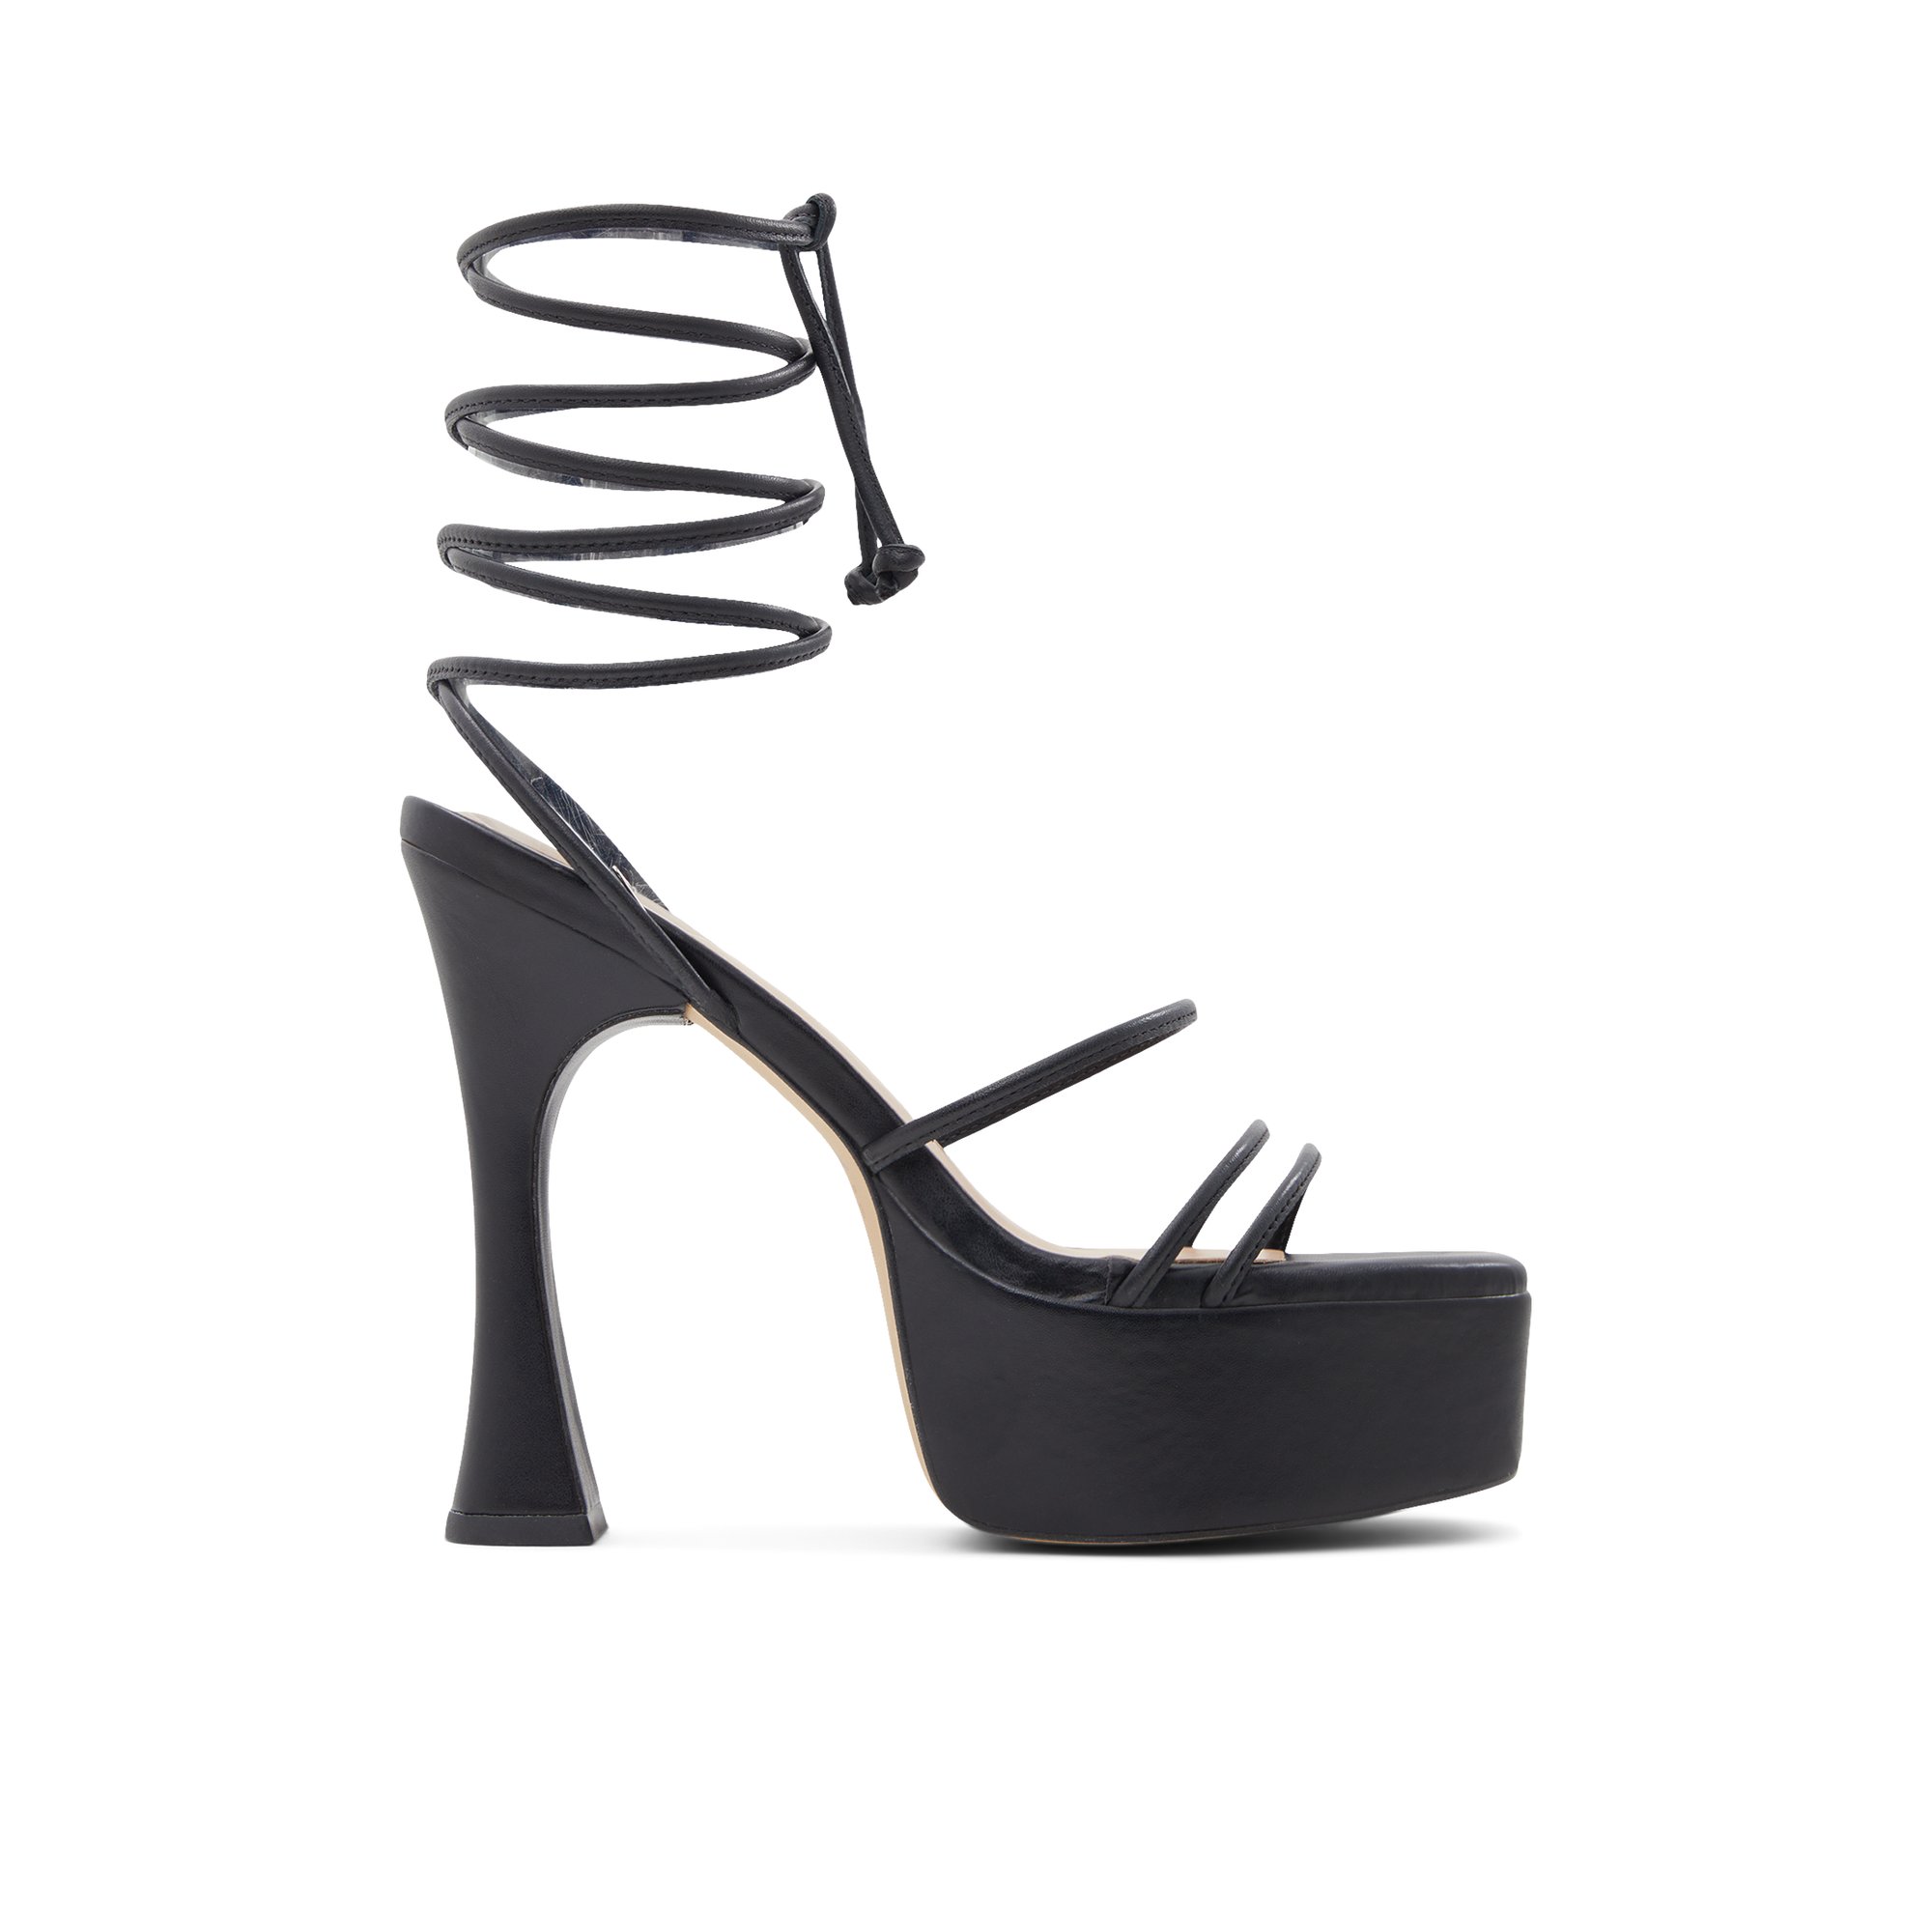 ALDO Paya - Women's Sandals Strappy - Black